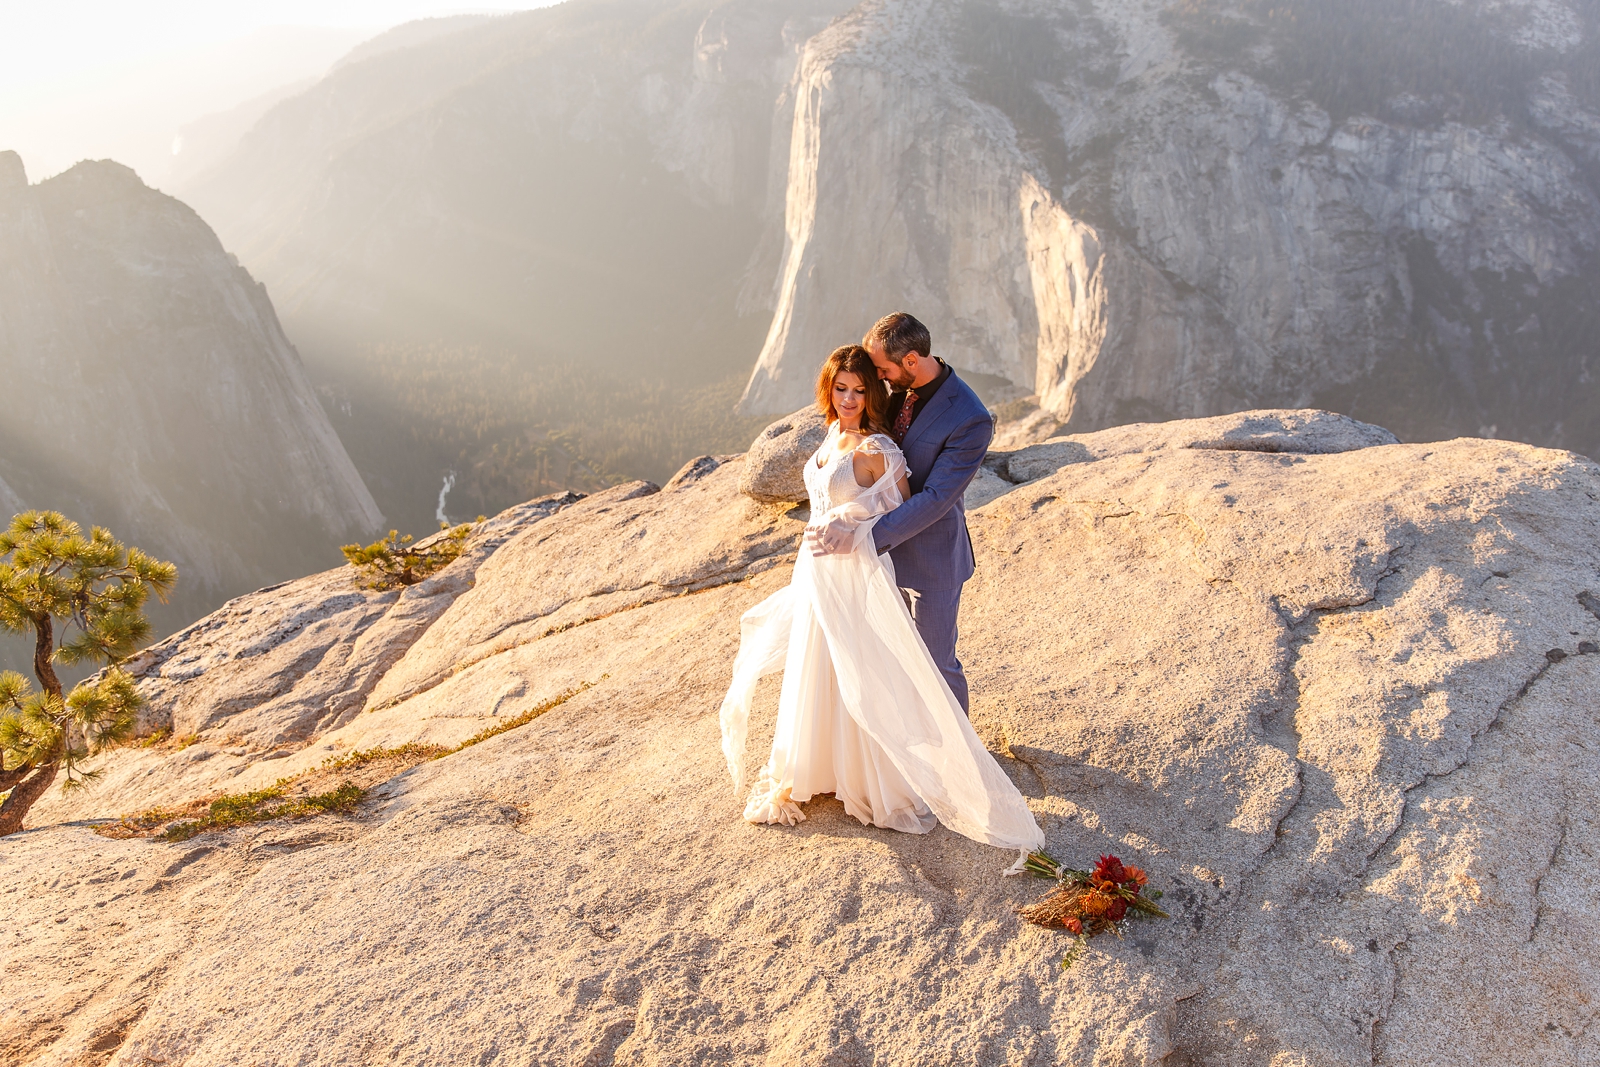 Bride and groom dancing at golden hour in Yosemite NP.